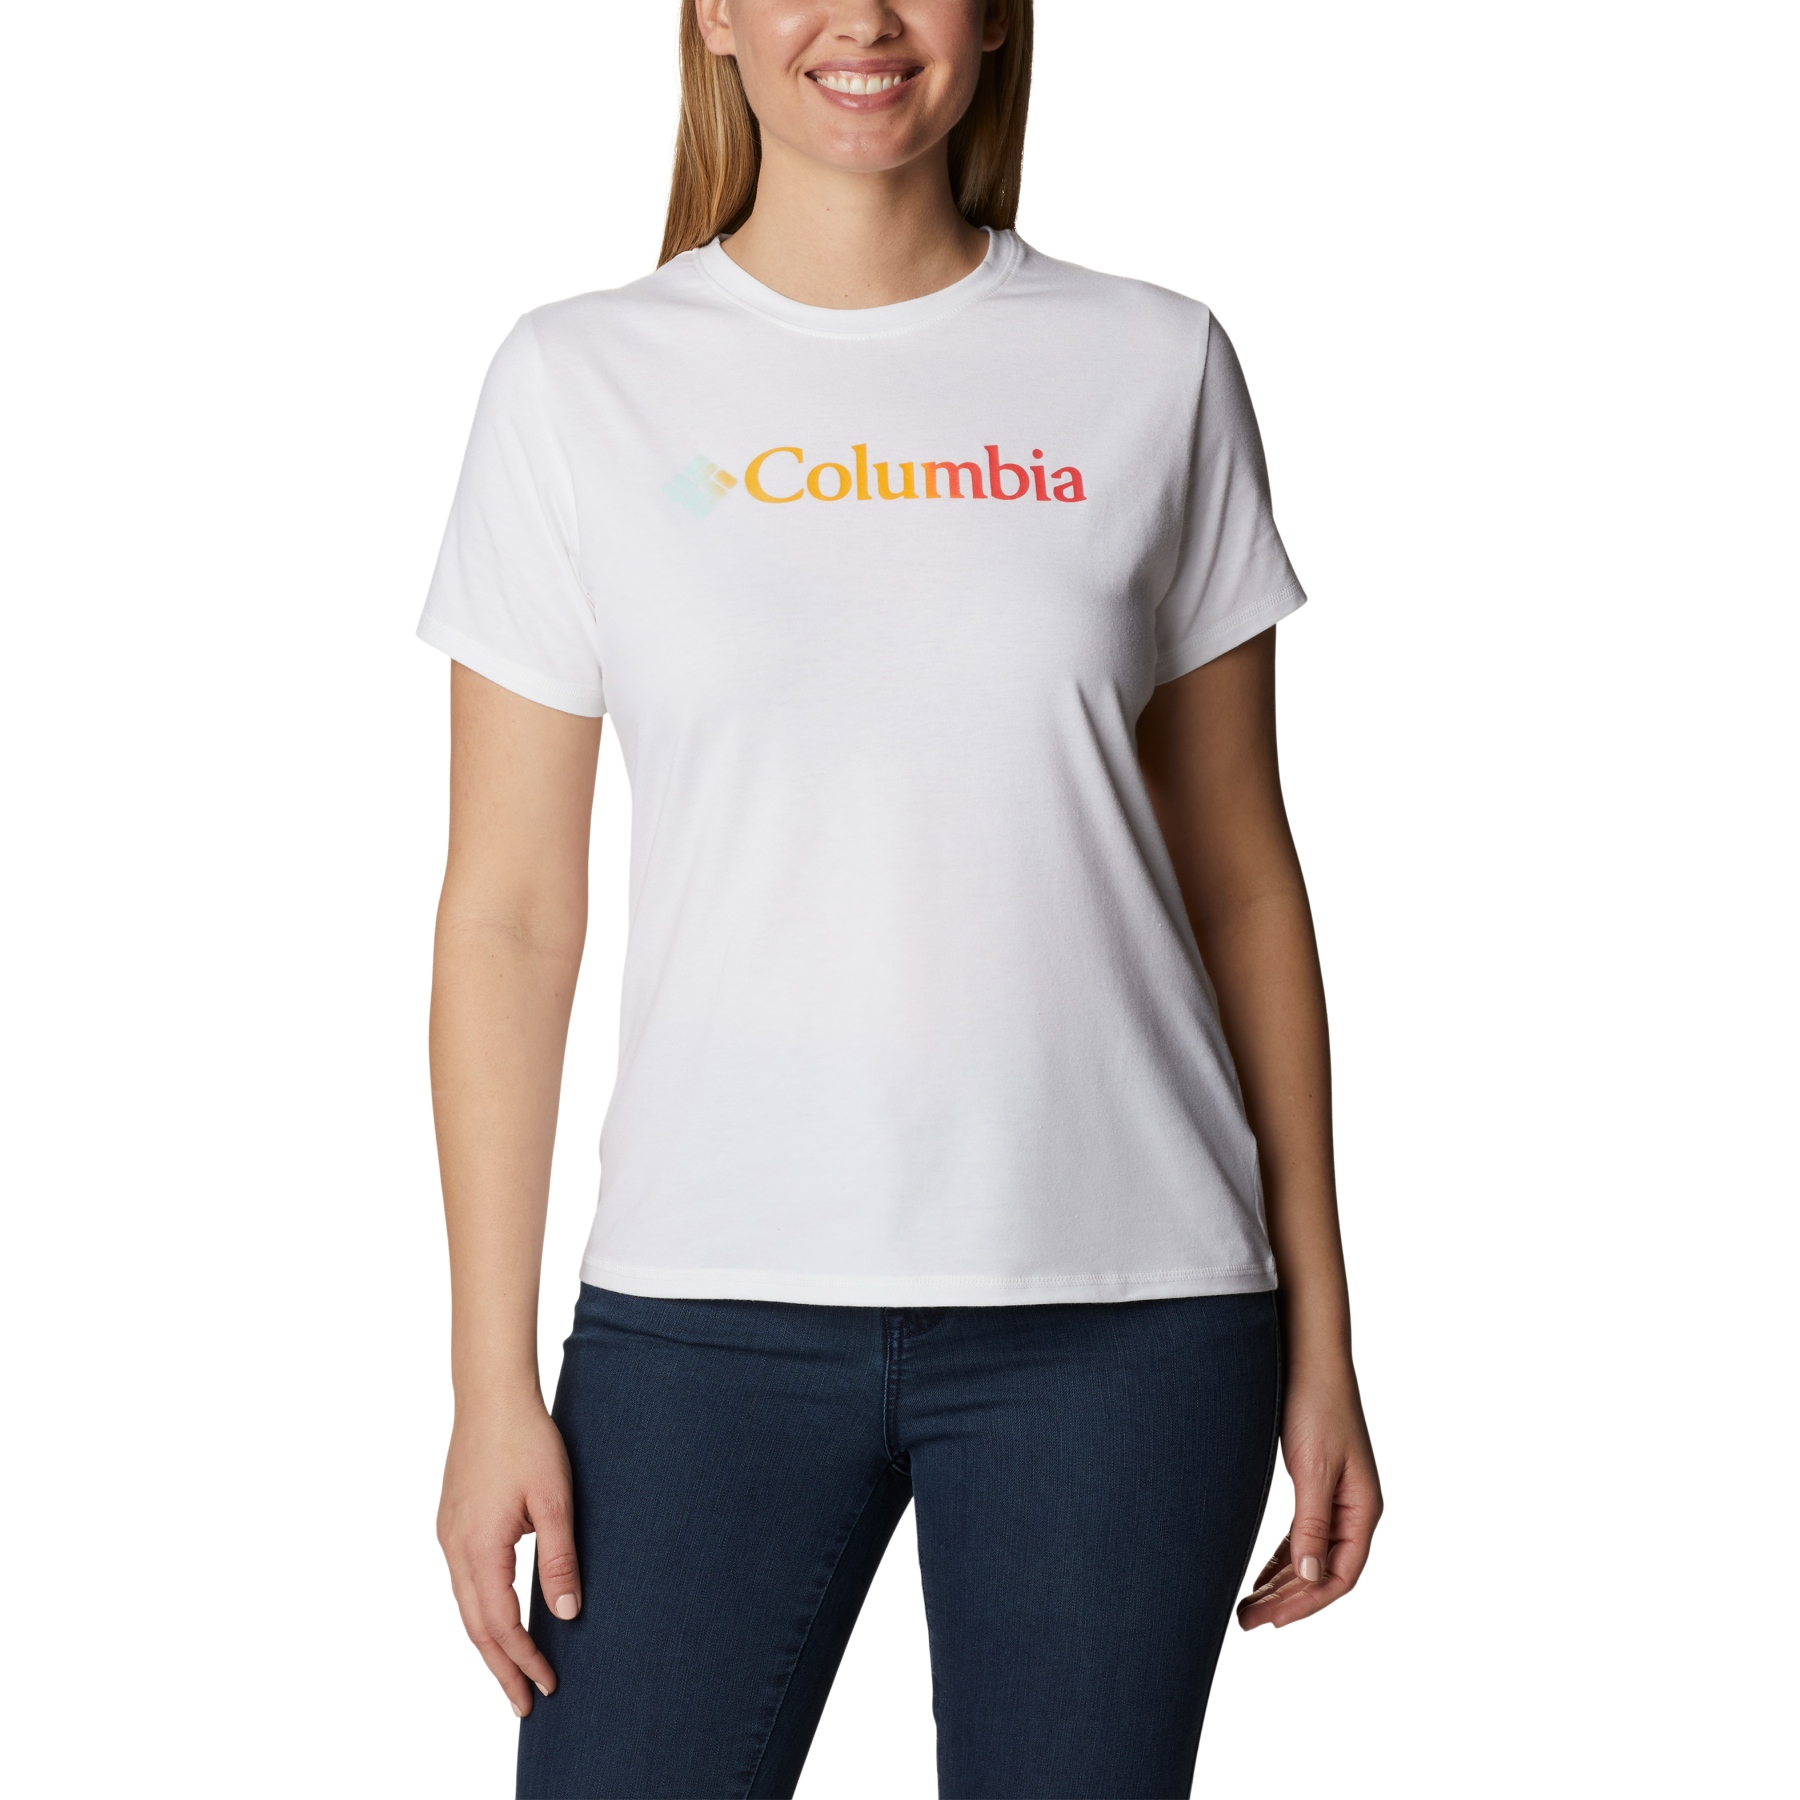 Productfoto van Columbia Sun Trek Graphic T-Shirt Dames - White/Branded Gradient